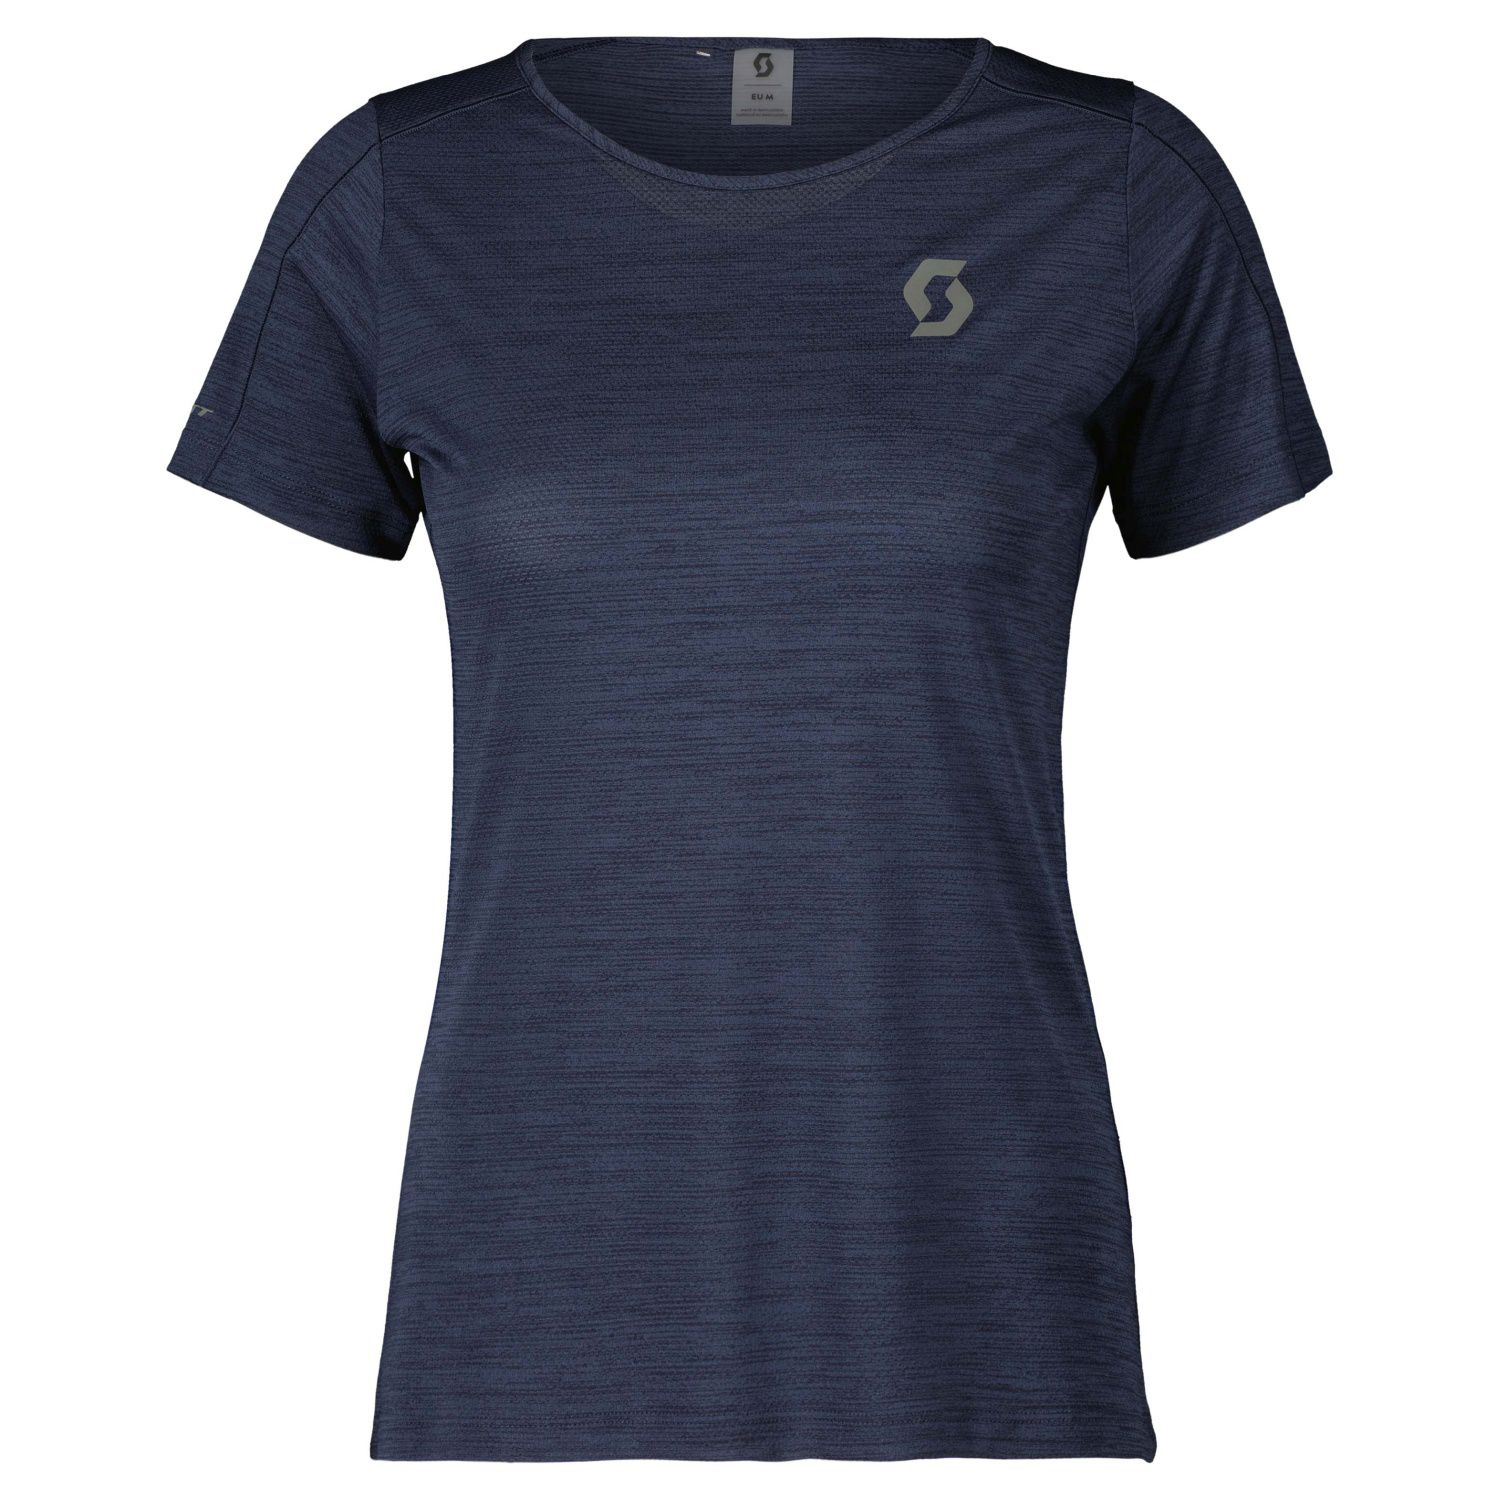 Camiseta Scott Ws Endurance Lt Ss - azul - 